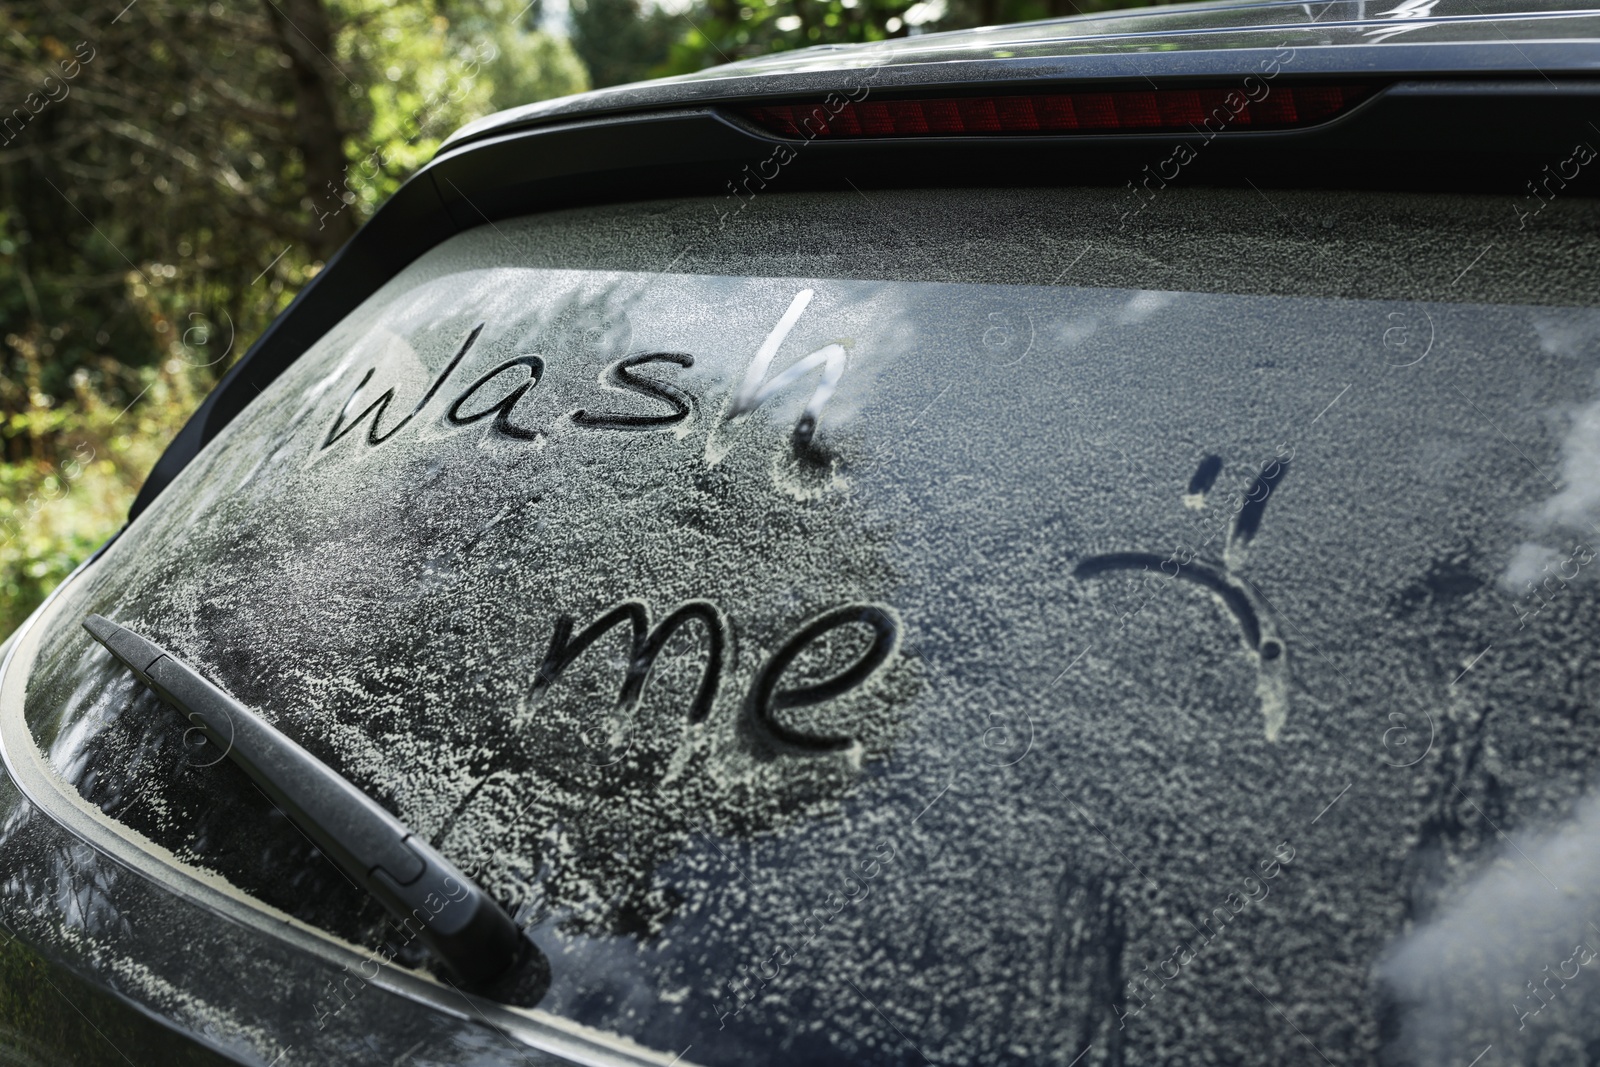 Photo of Phrase Wash me written on dirty car window outdoors, closeup